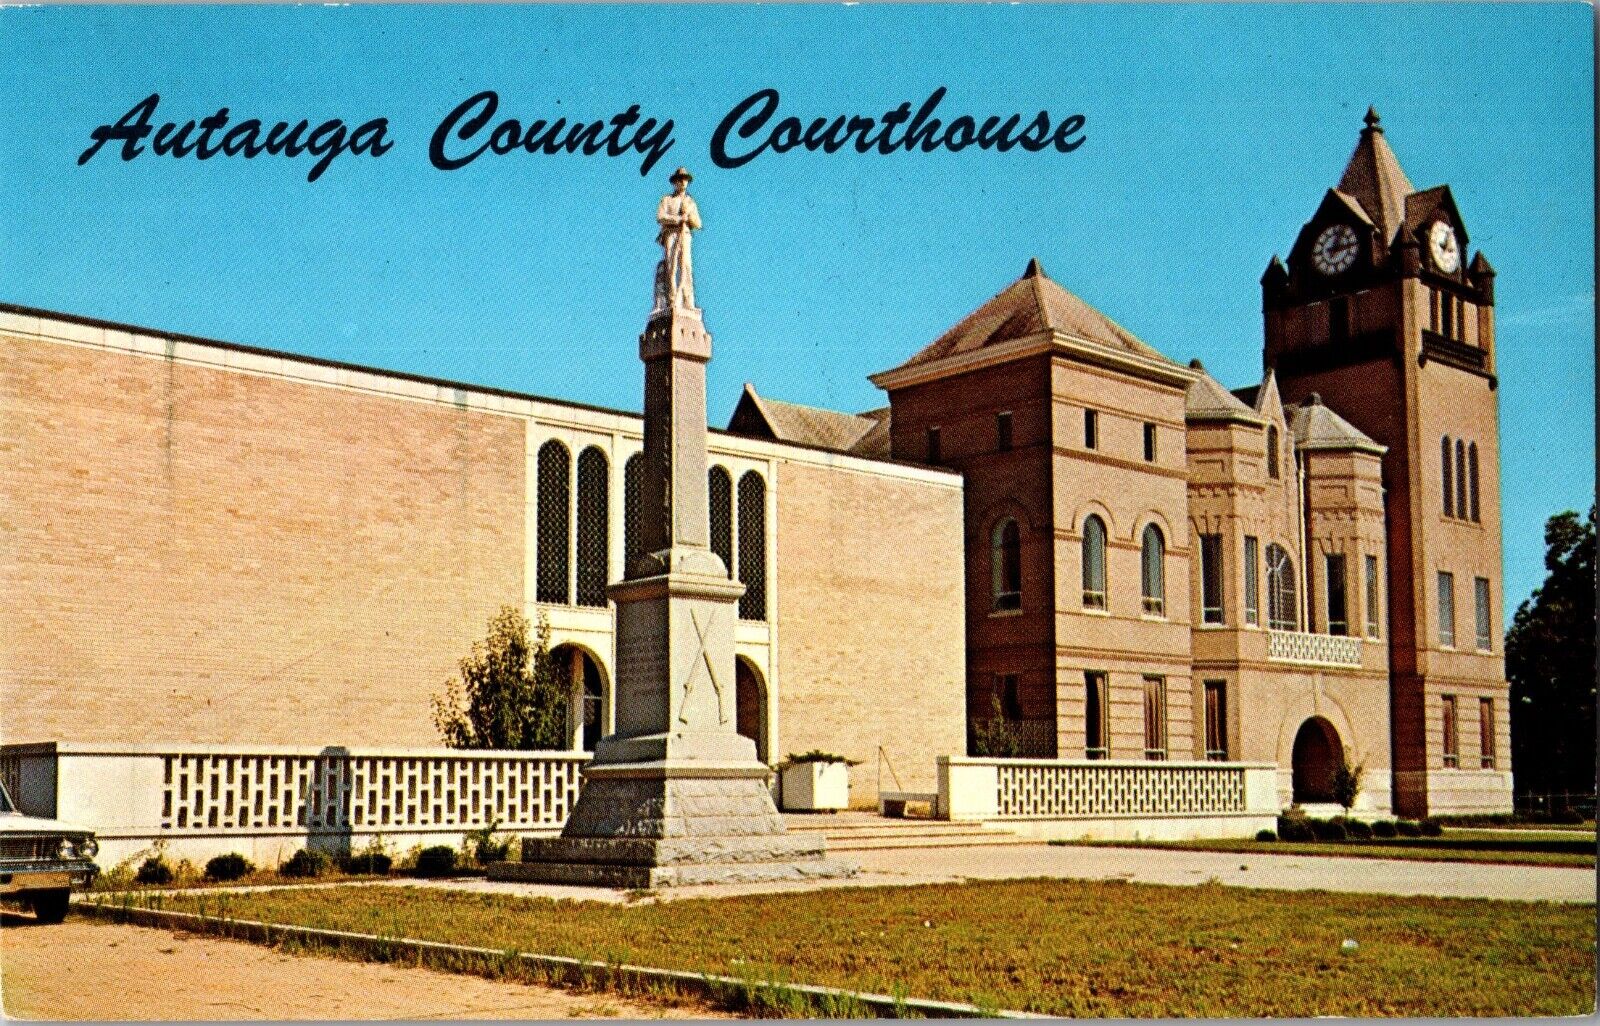 Prattville Alabama AL Autauga County Courthouse Chrome Postcard 1960s unposted